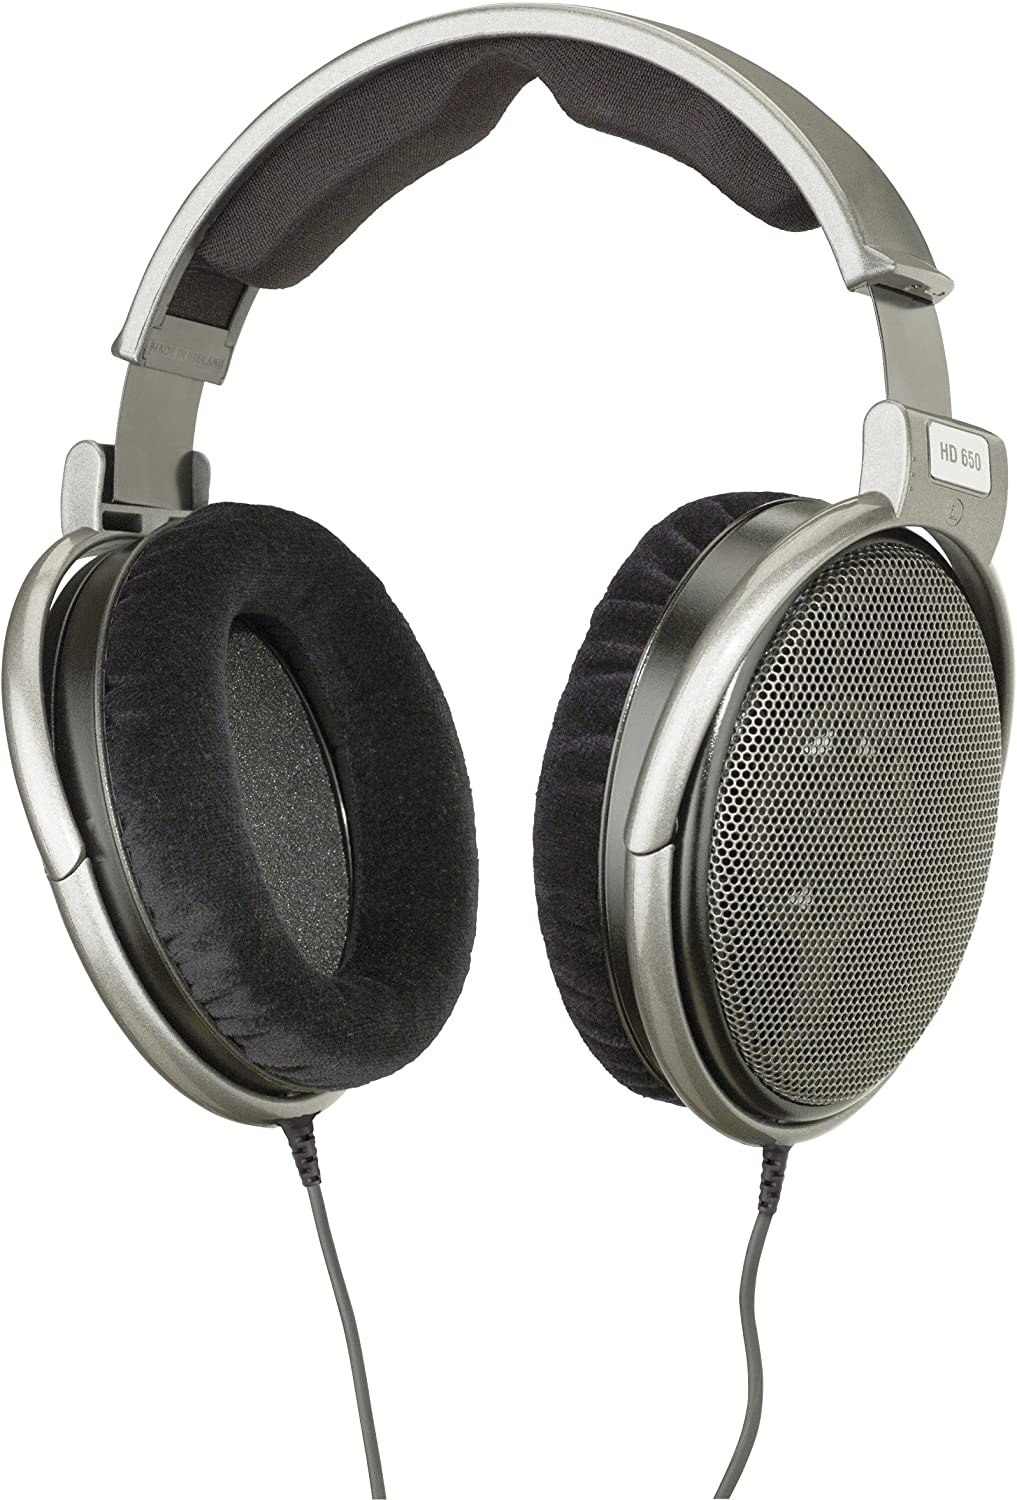 SENNHEISER HD 650 OPEN-BACK AUDIOPHILE AND REFERENCE HEADPHONES (HD650), SENNHEISER, HEADPHONE, sennheiser-headphone-hd650, ZOSO MUSIC SDN BHD